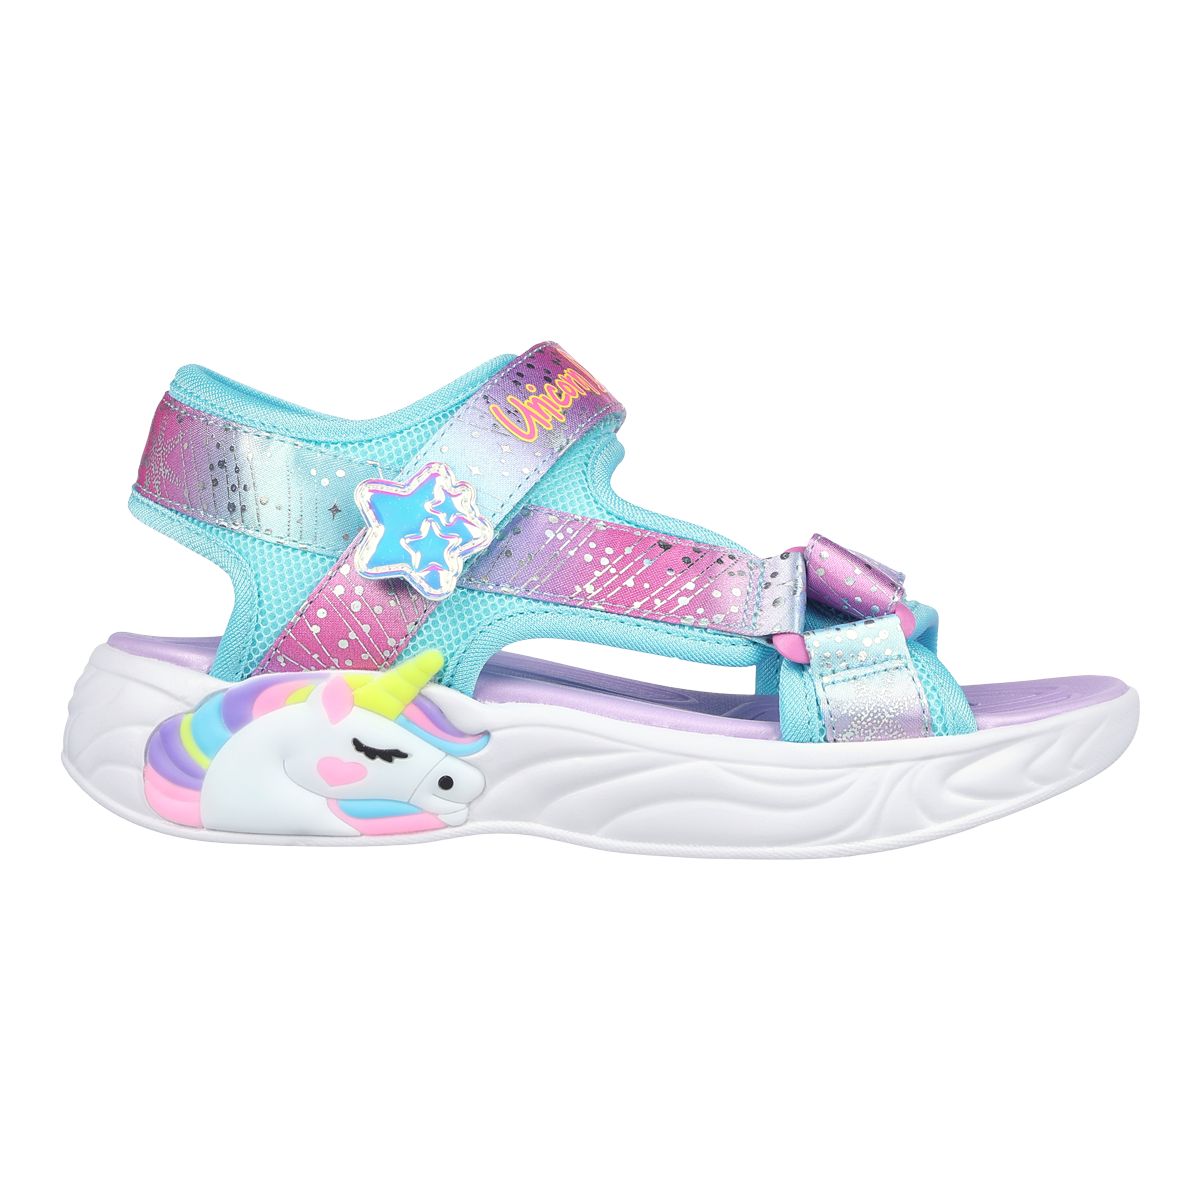 Image of Skechers Girls' Pre-School Unicorn Dreams Sandals